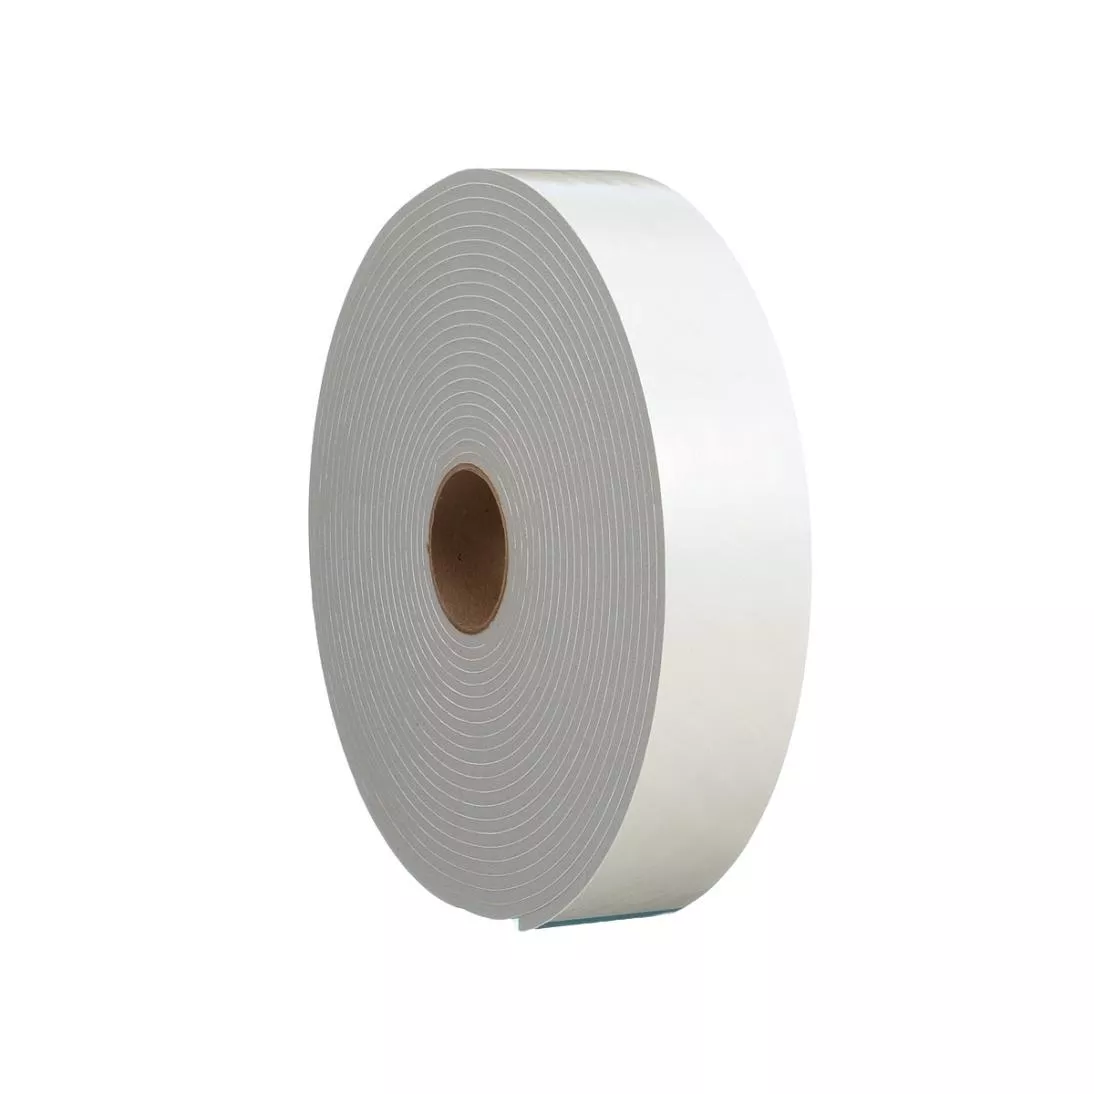 3M™ Venture Tape™ Vinyl Foam Tape 1714, Gray, 3 in x 50 ft, 250 mil, 4
rolls per case